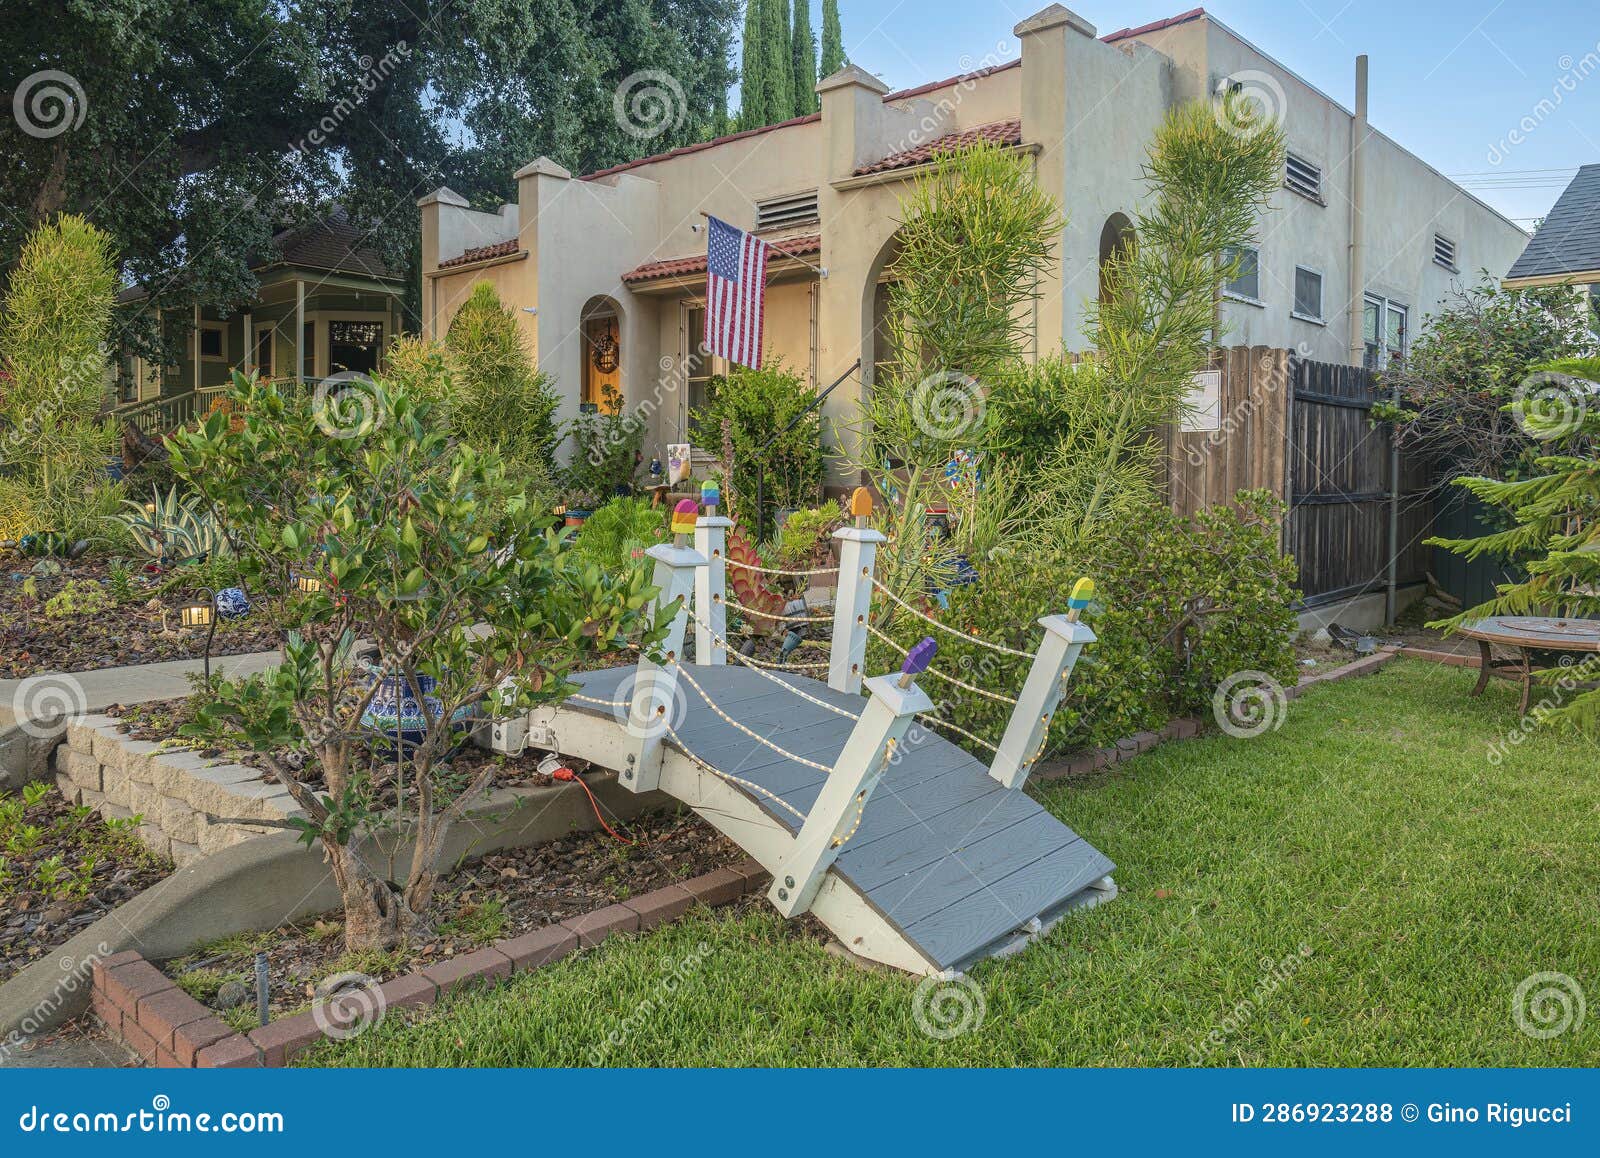 residential neighborhood in monrovia california